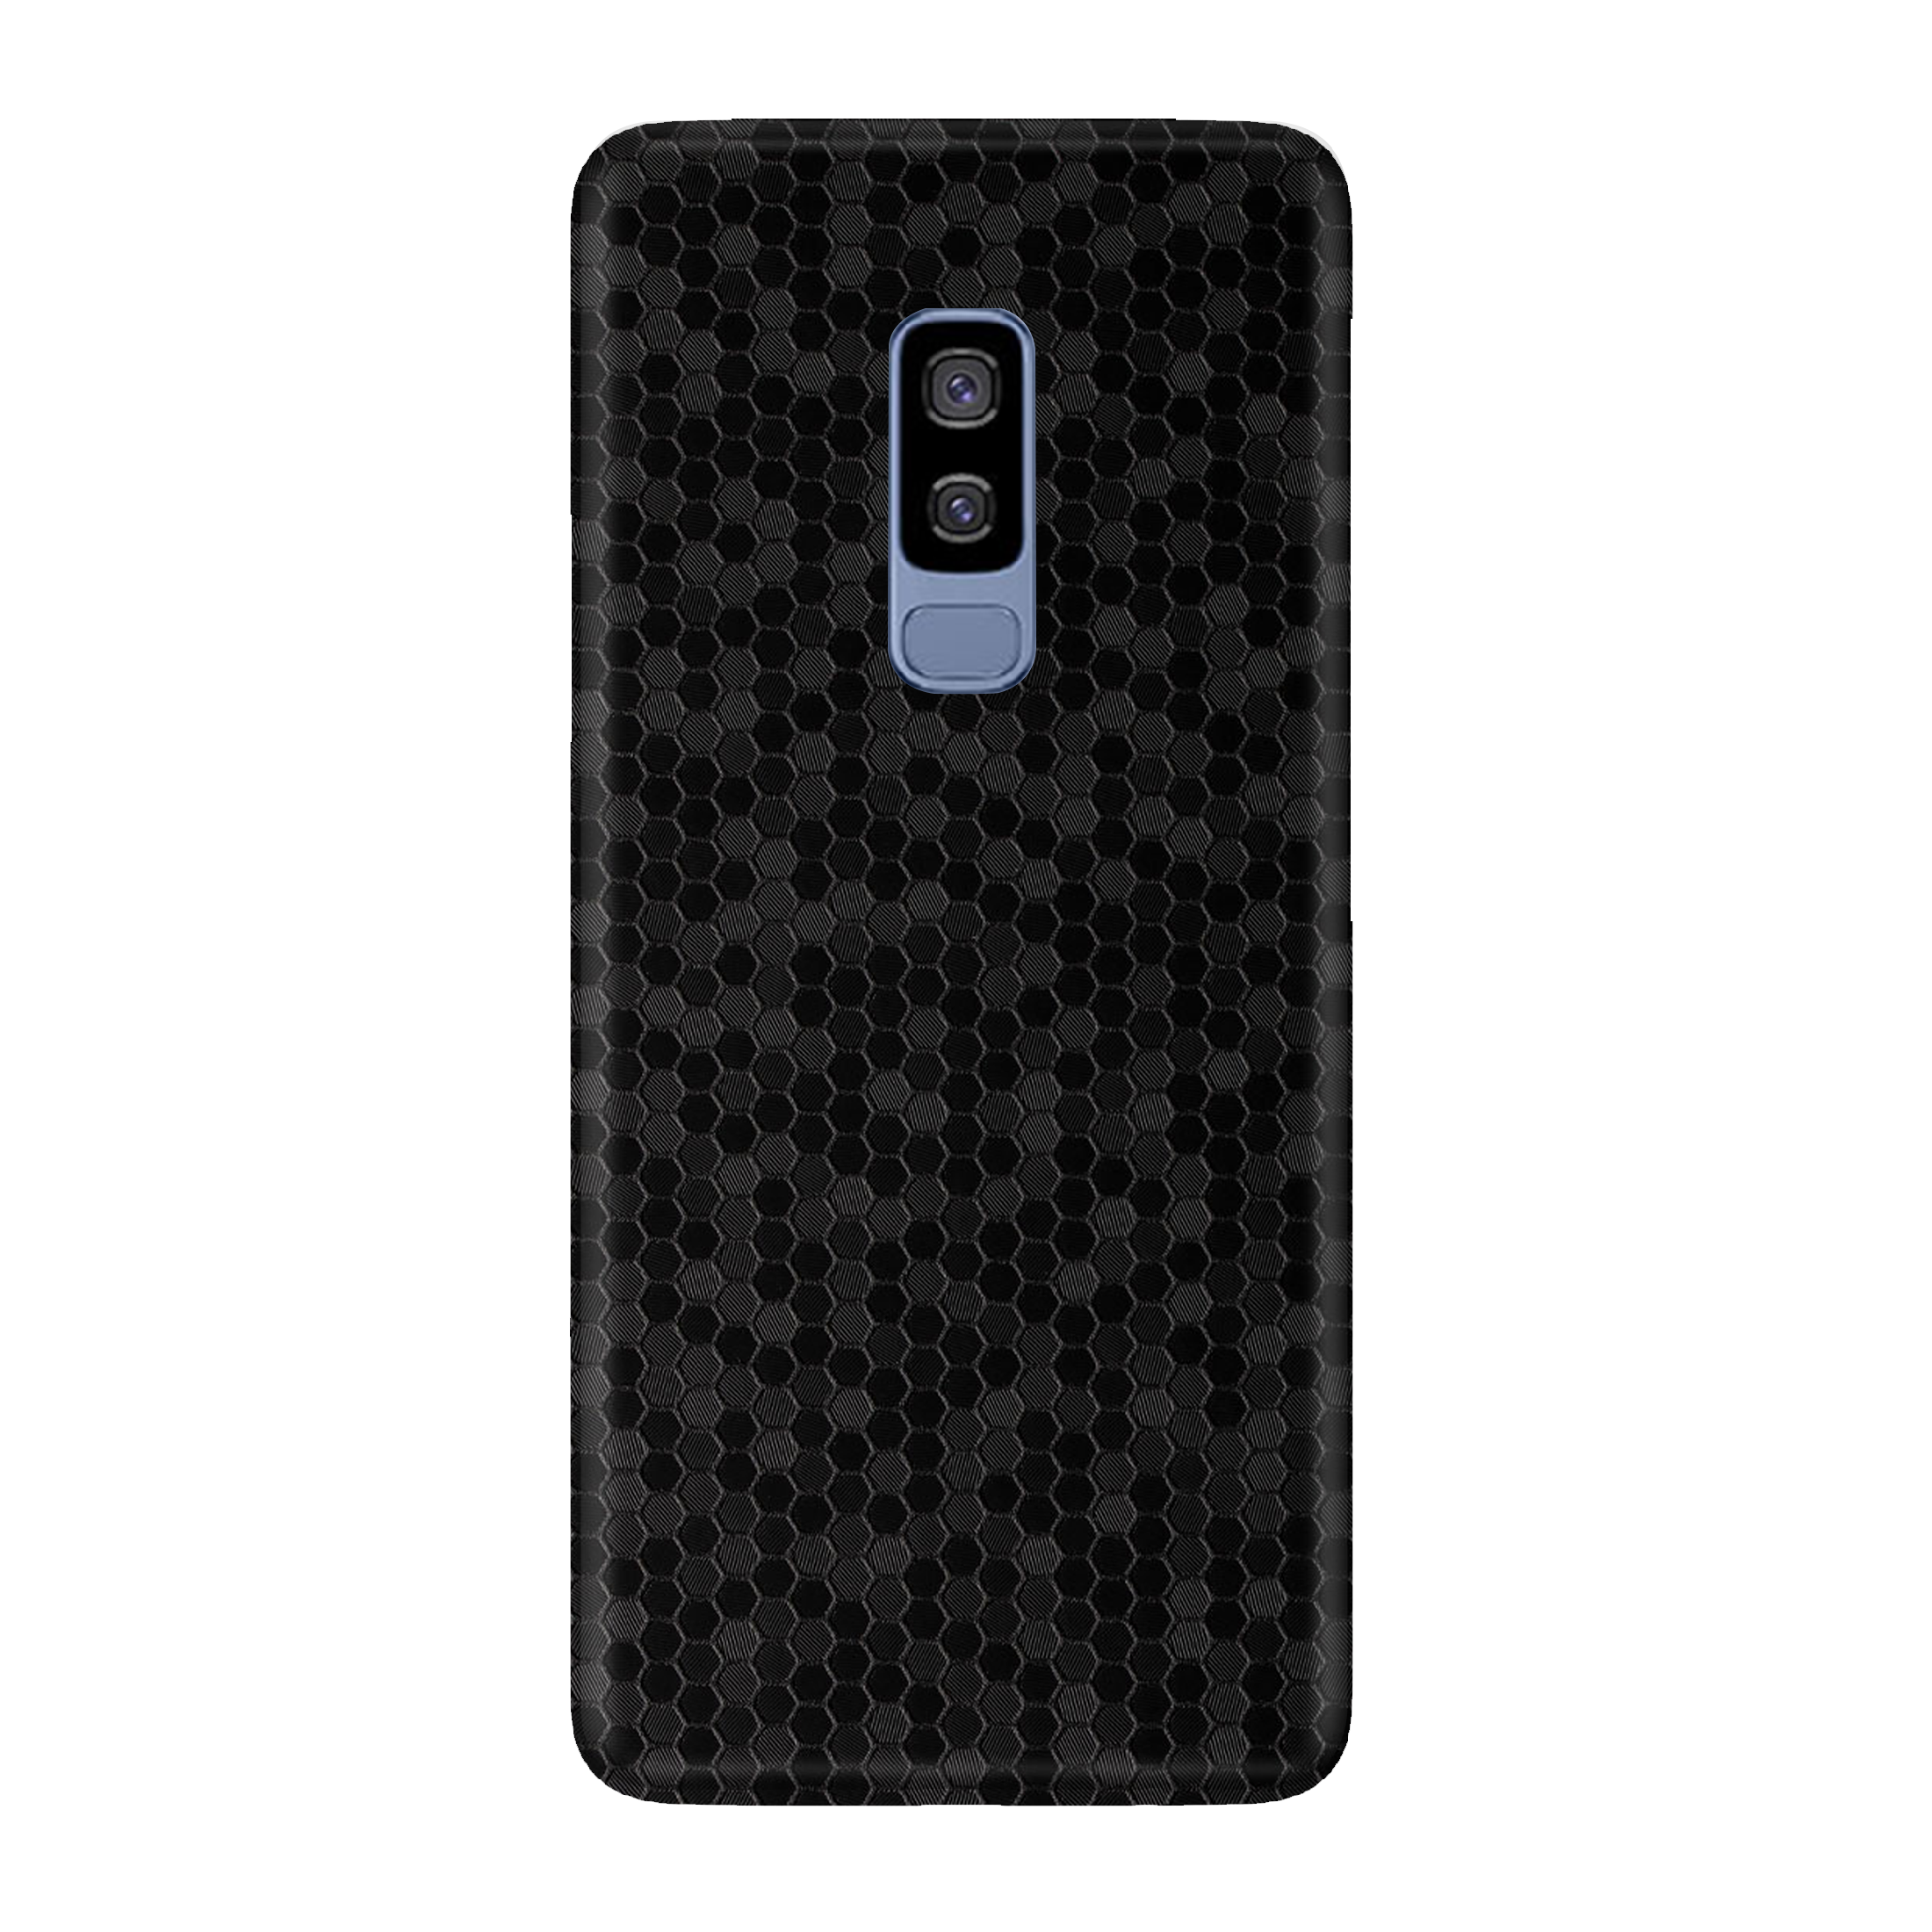 Honeycomb Black Skin for Samsung S9 Plus